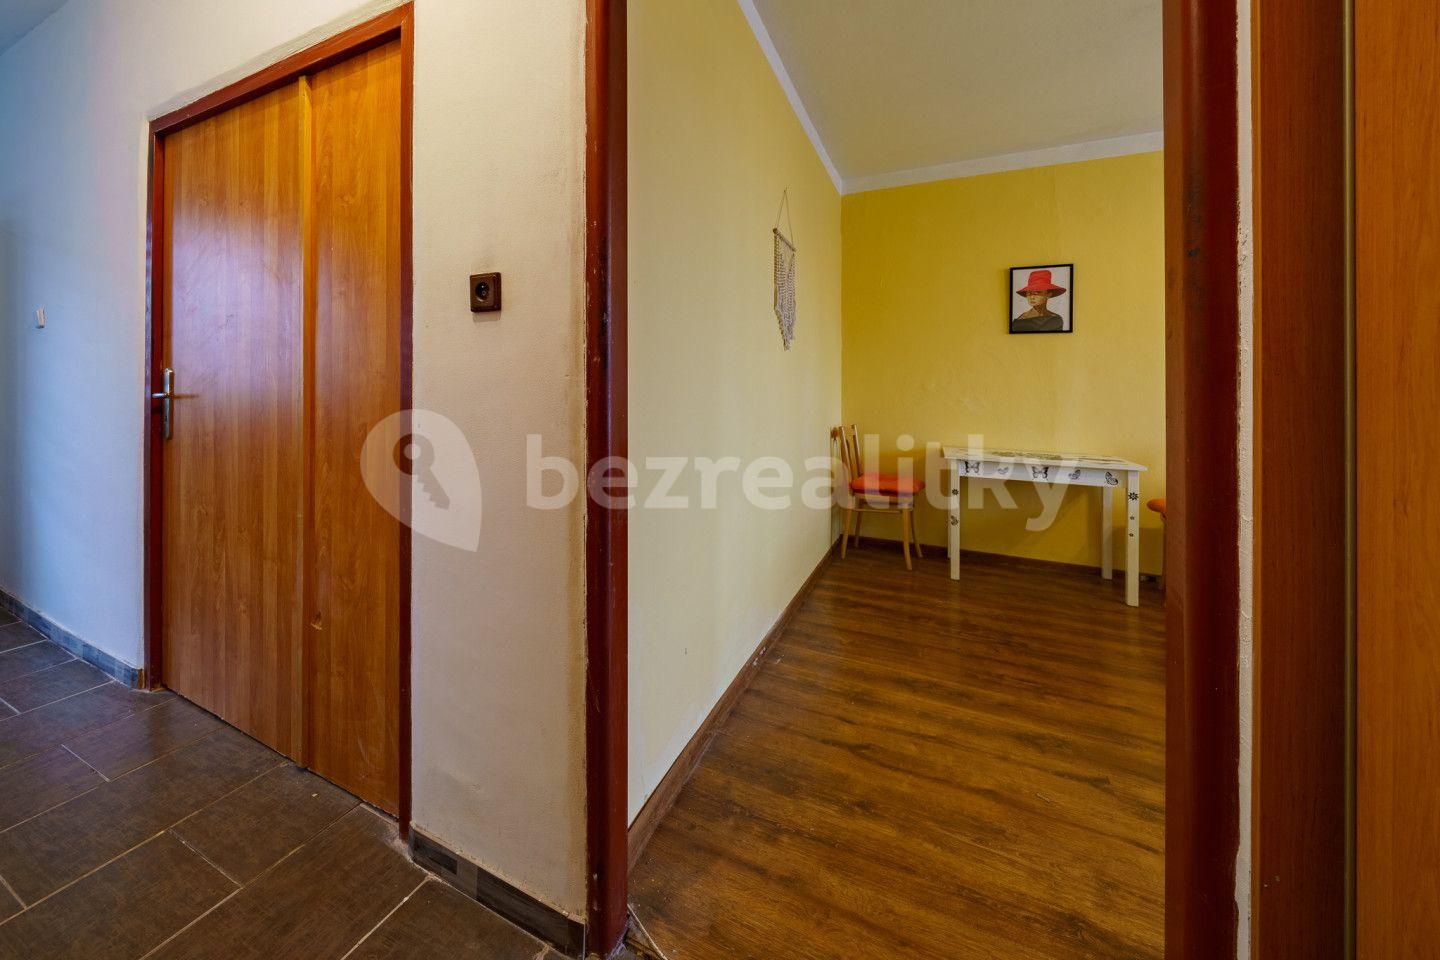 3 bedroom flat for sale, 69 m², Kosmonautů, Cheb, Karlovarský Region